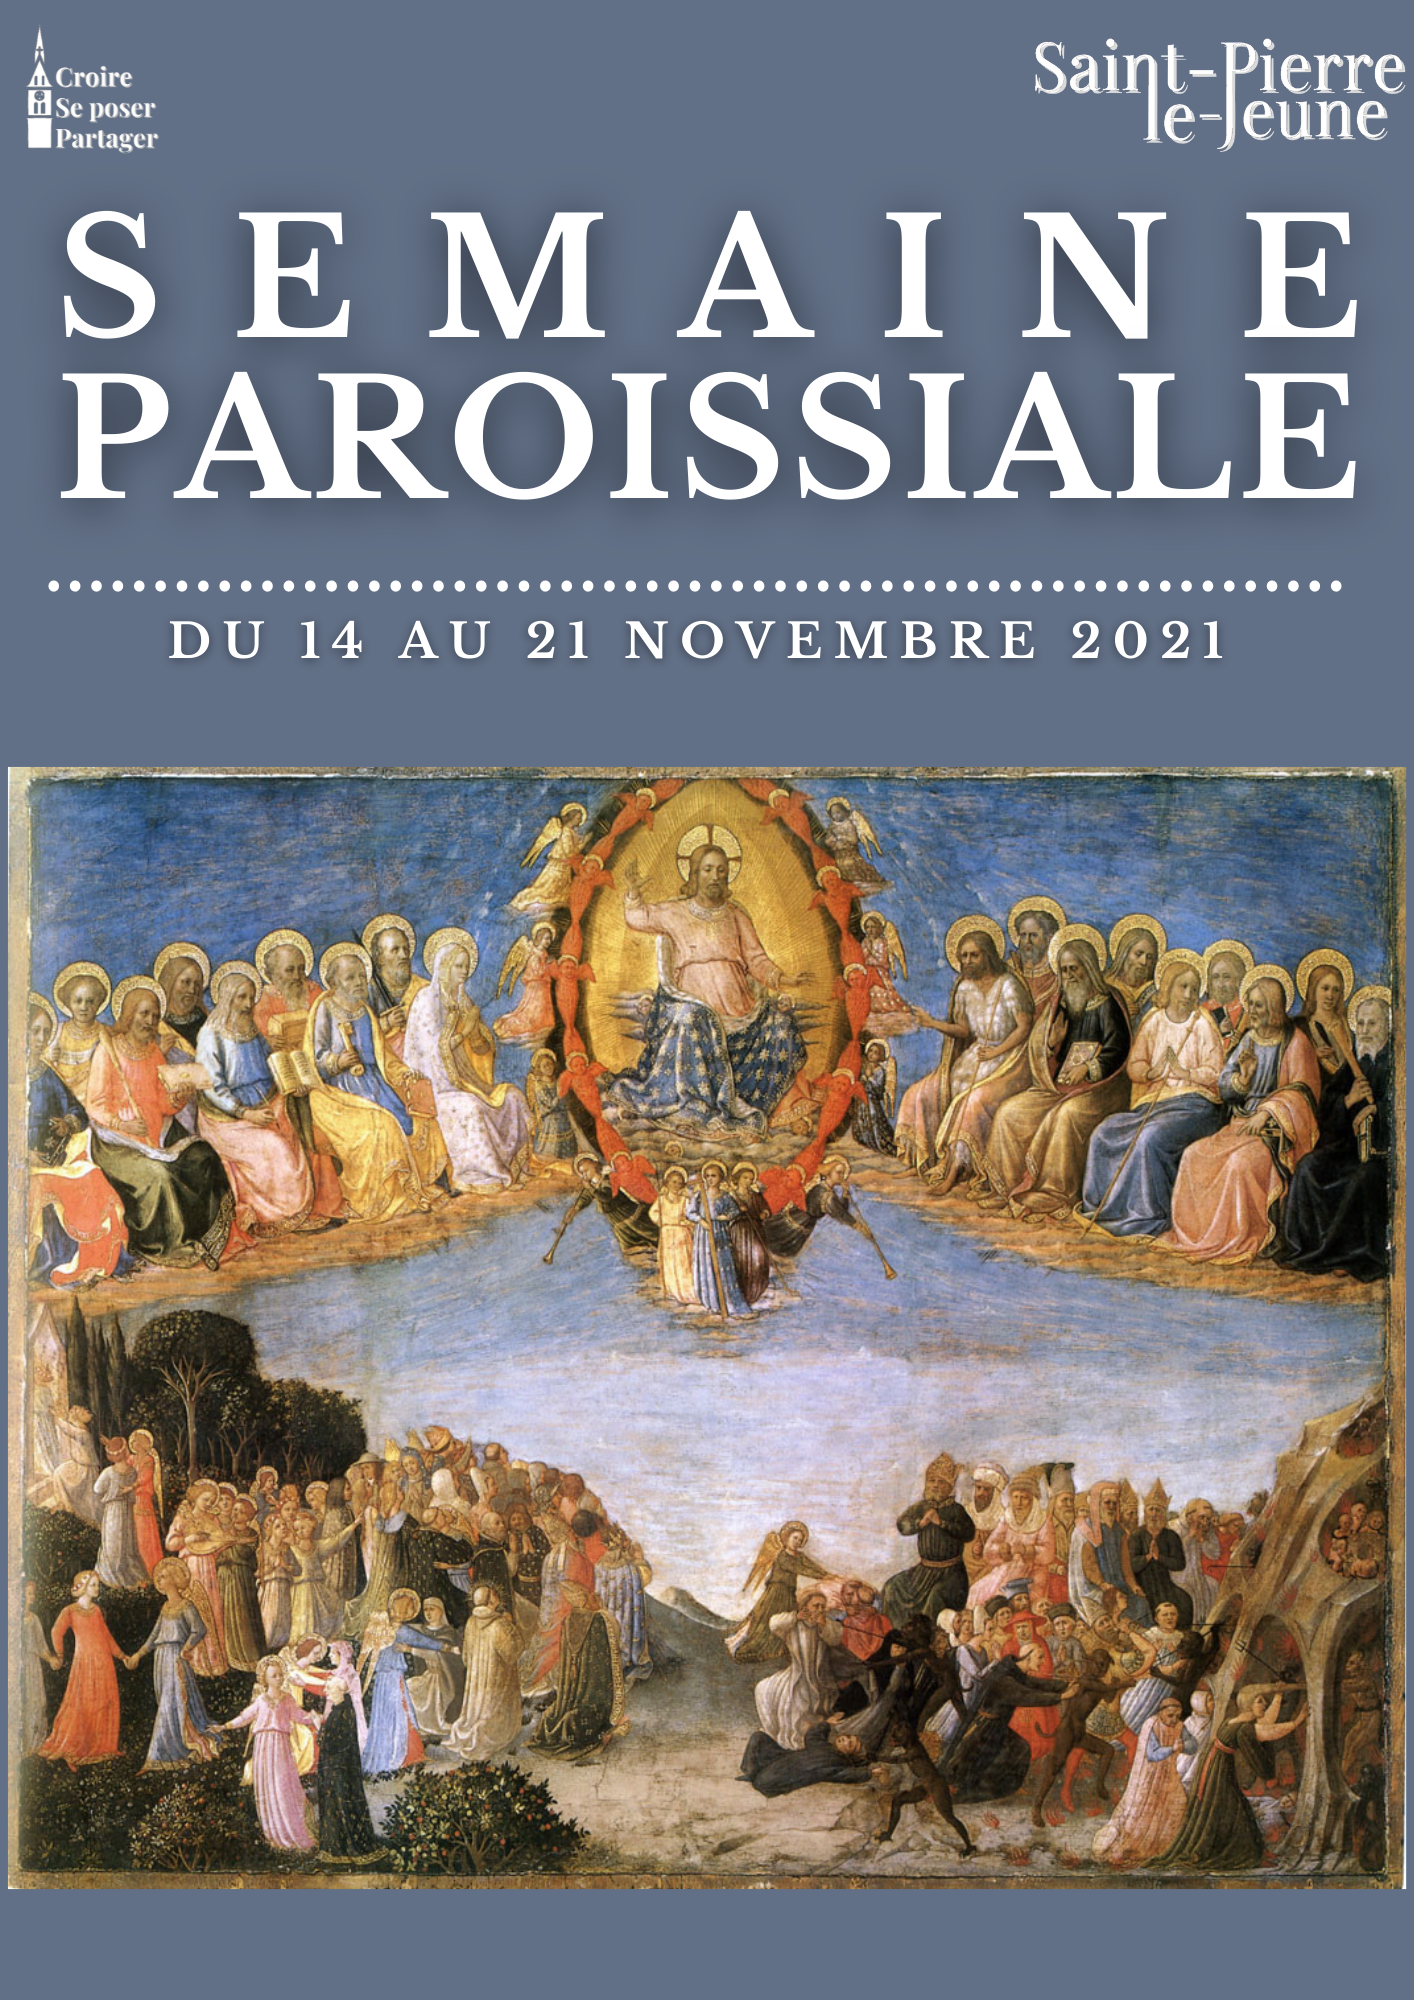 Semaine paroissiale - 14 novembre 2021